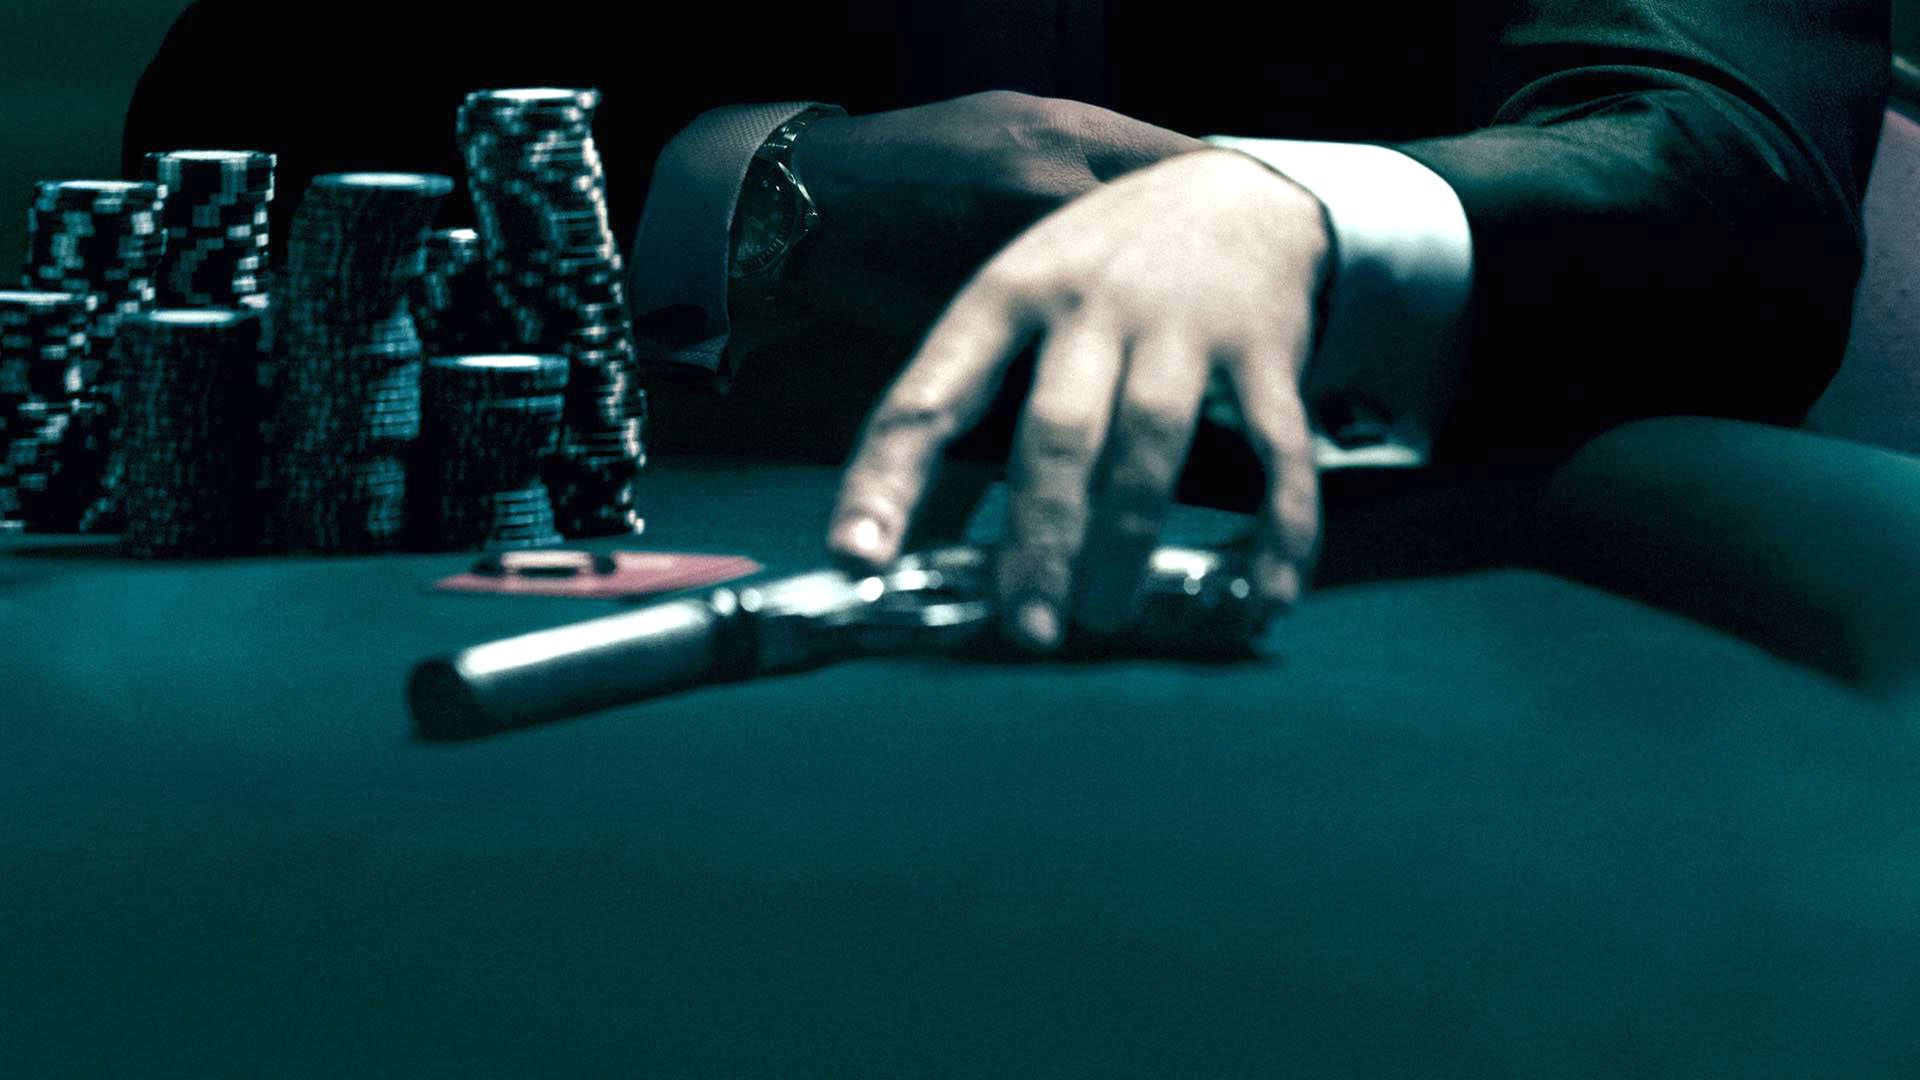 007 royal casino full hd vietsub